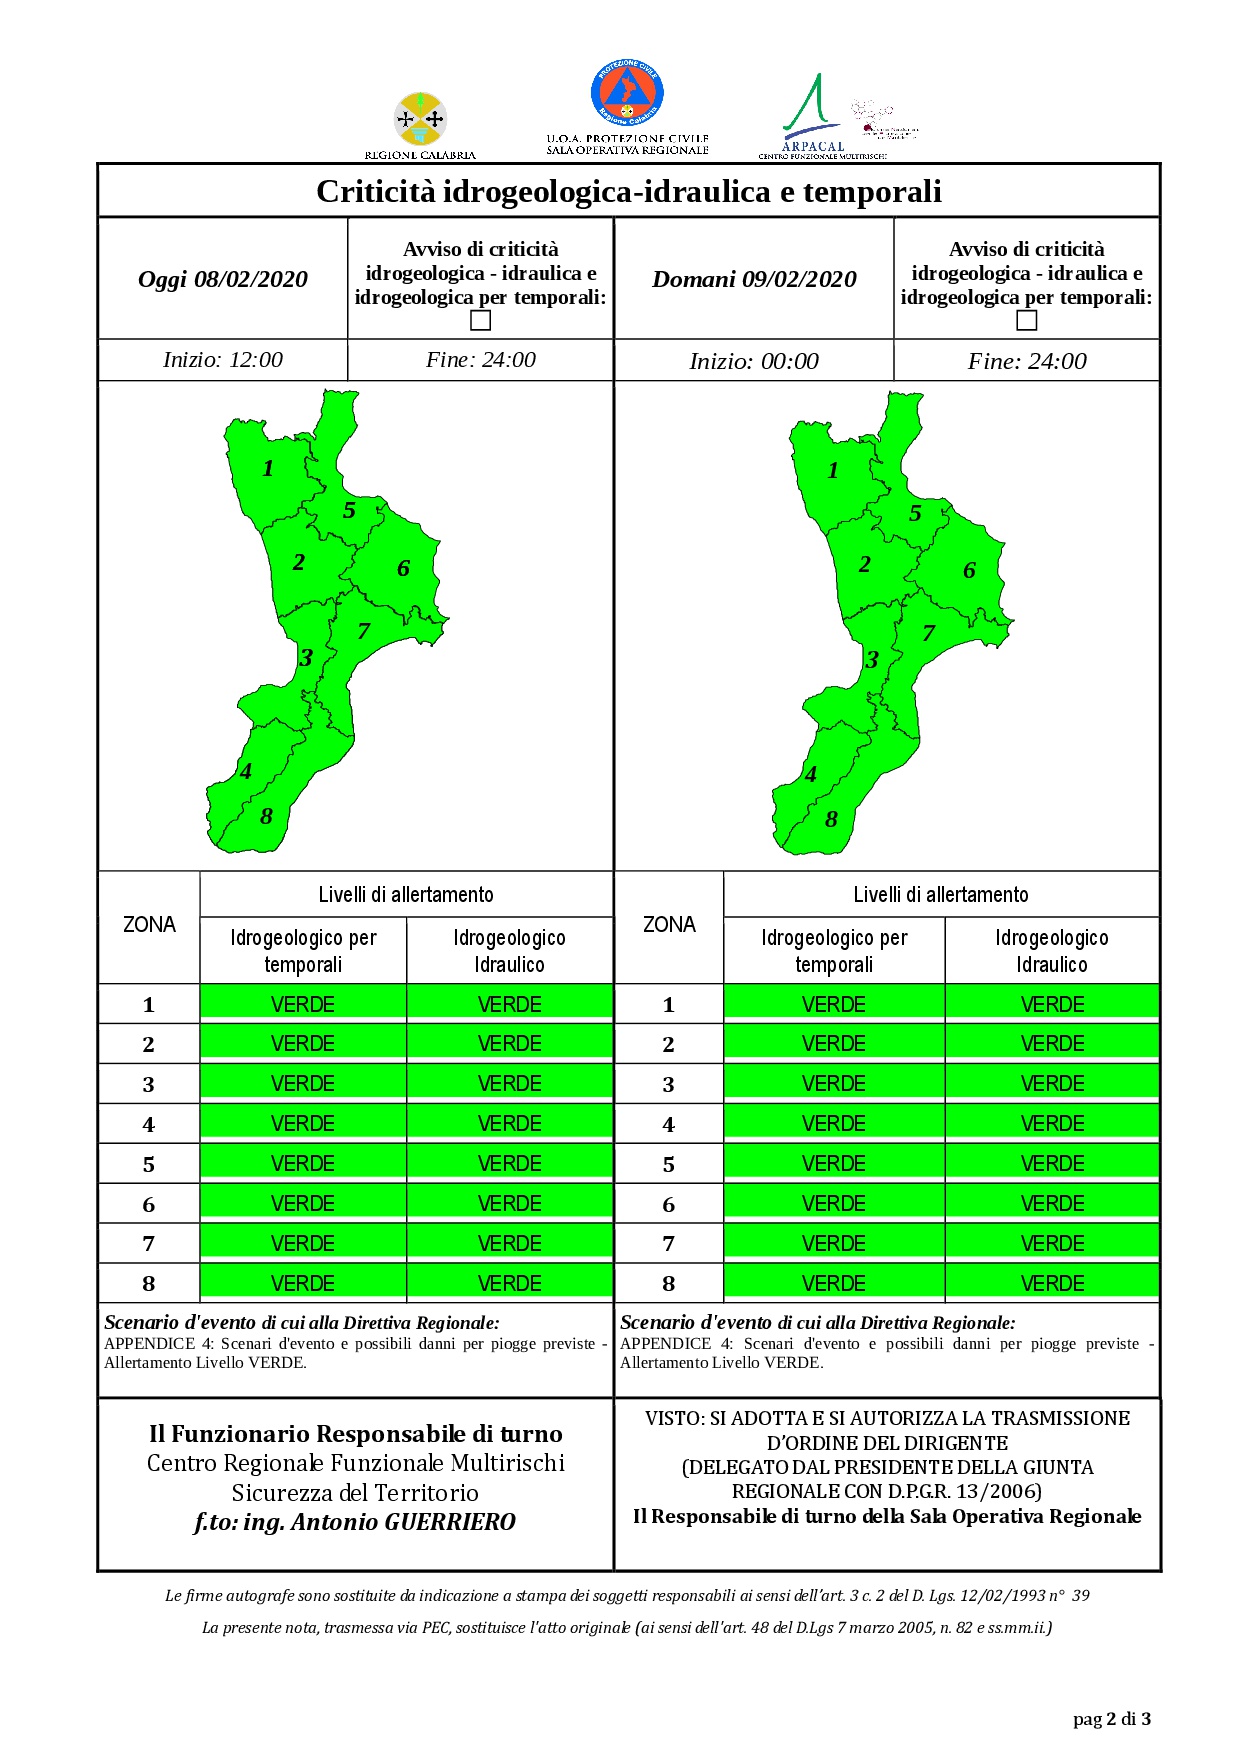 Criticità idrogeologica-idraulica e temporali in Calabria 08-02-2020